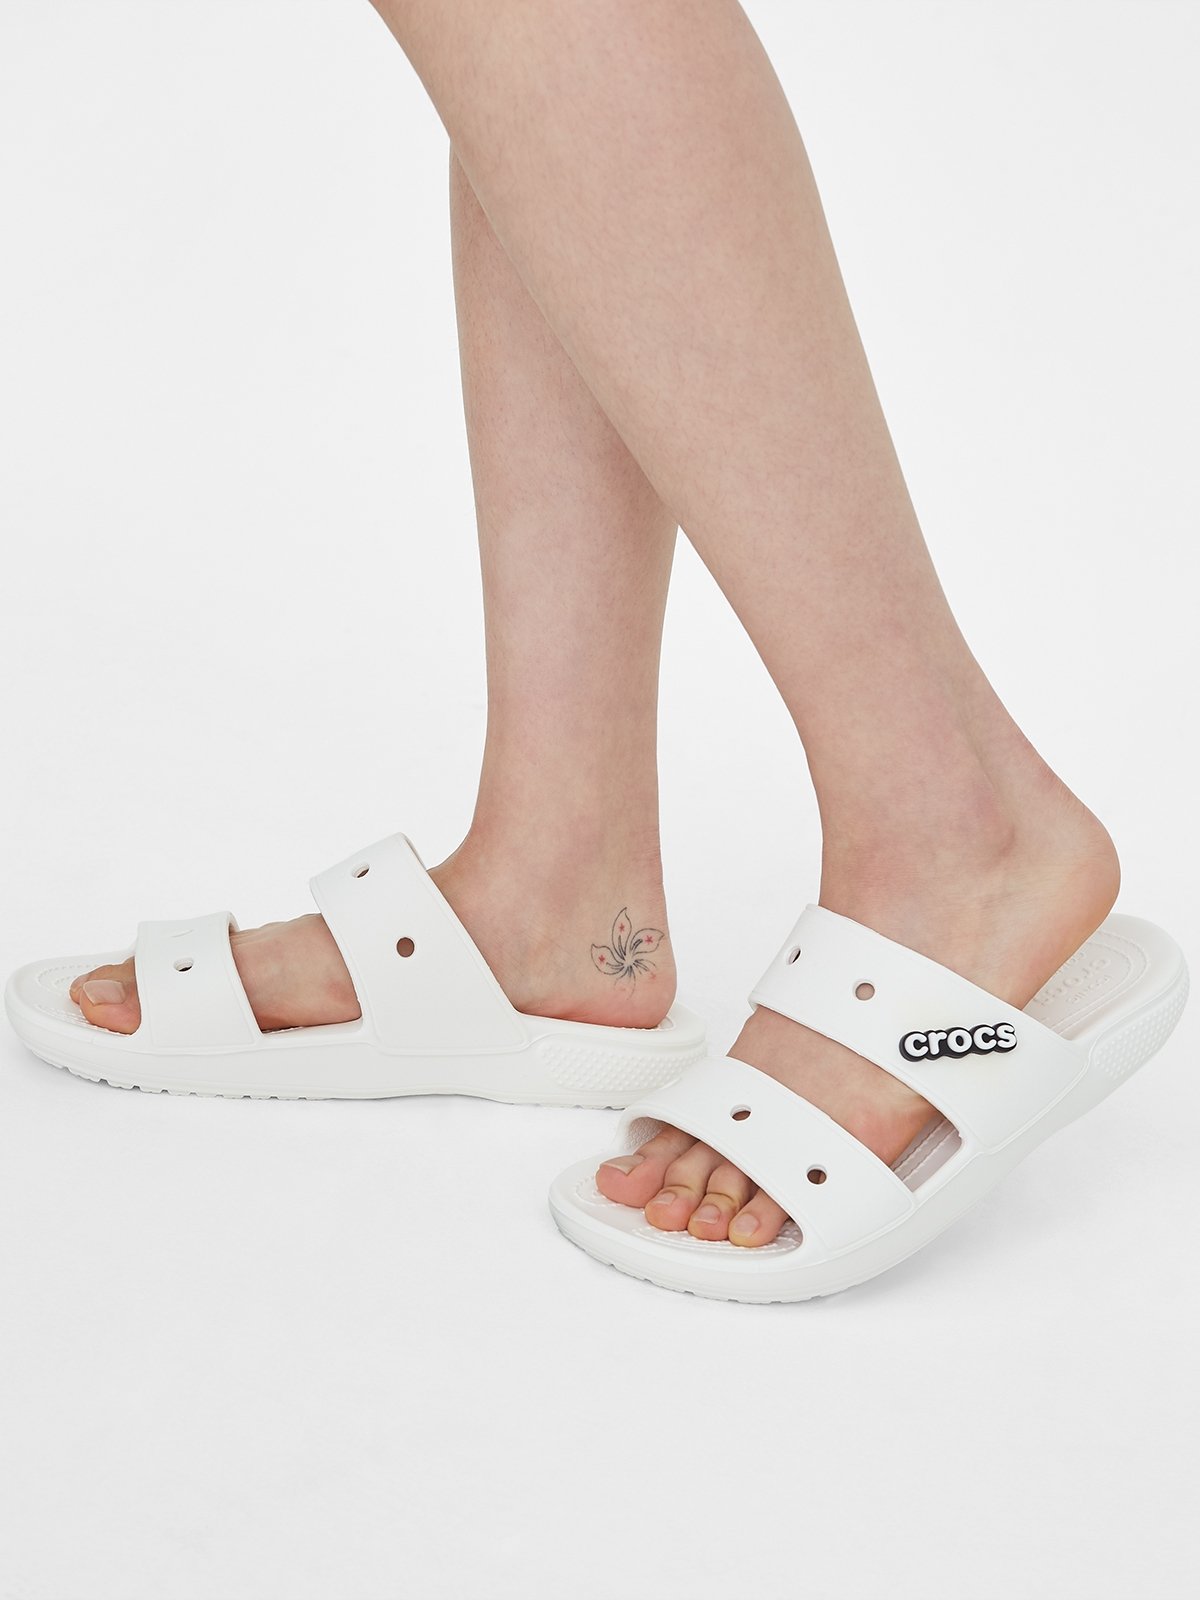 Crocs classic flat sandals in black | ASOS